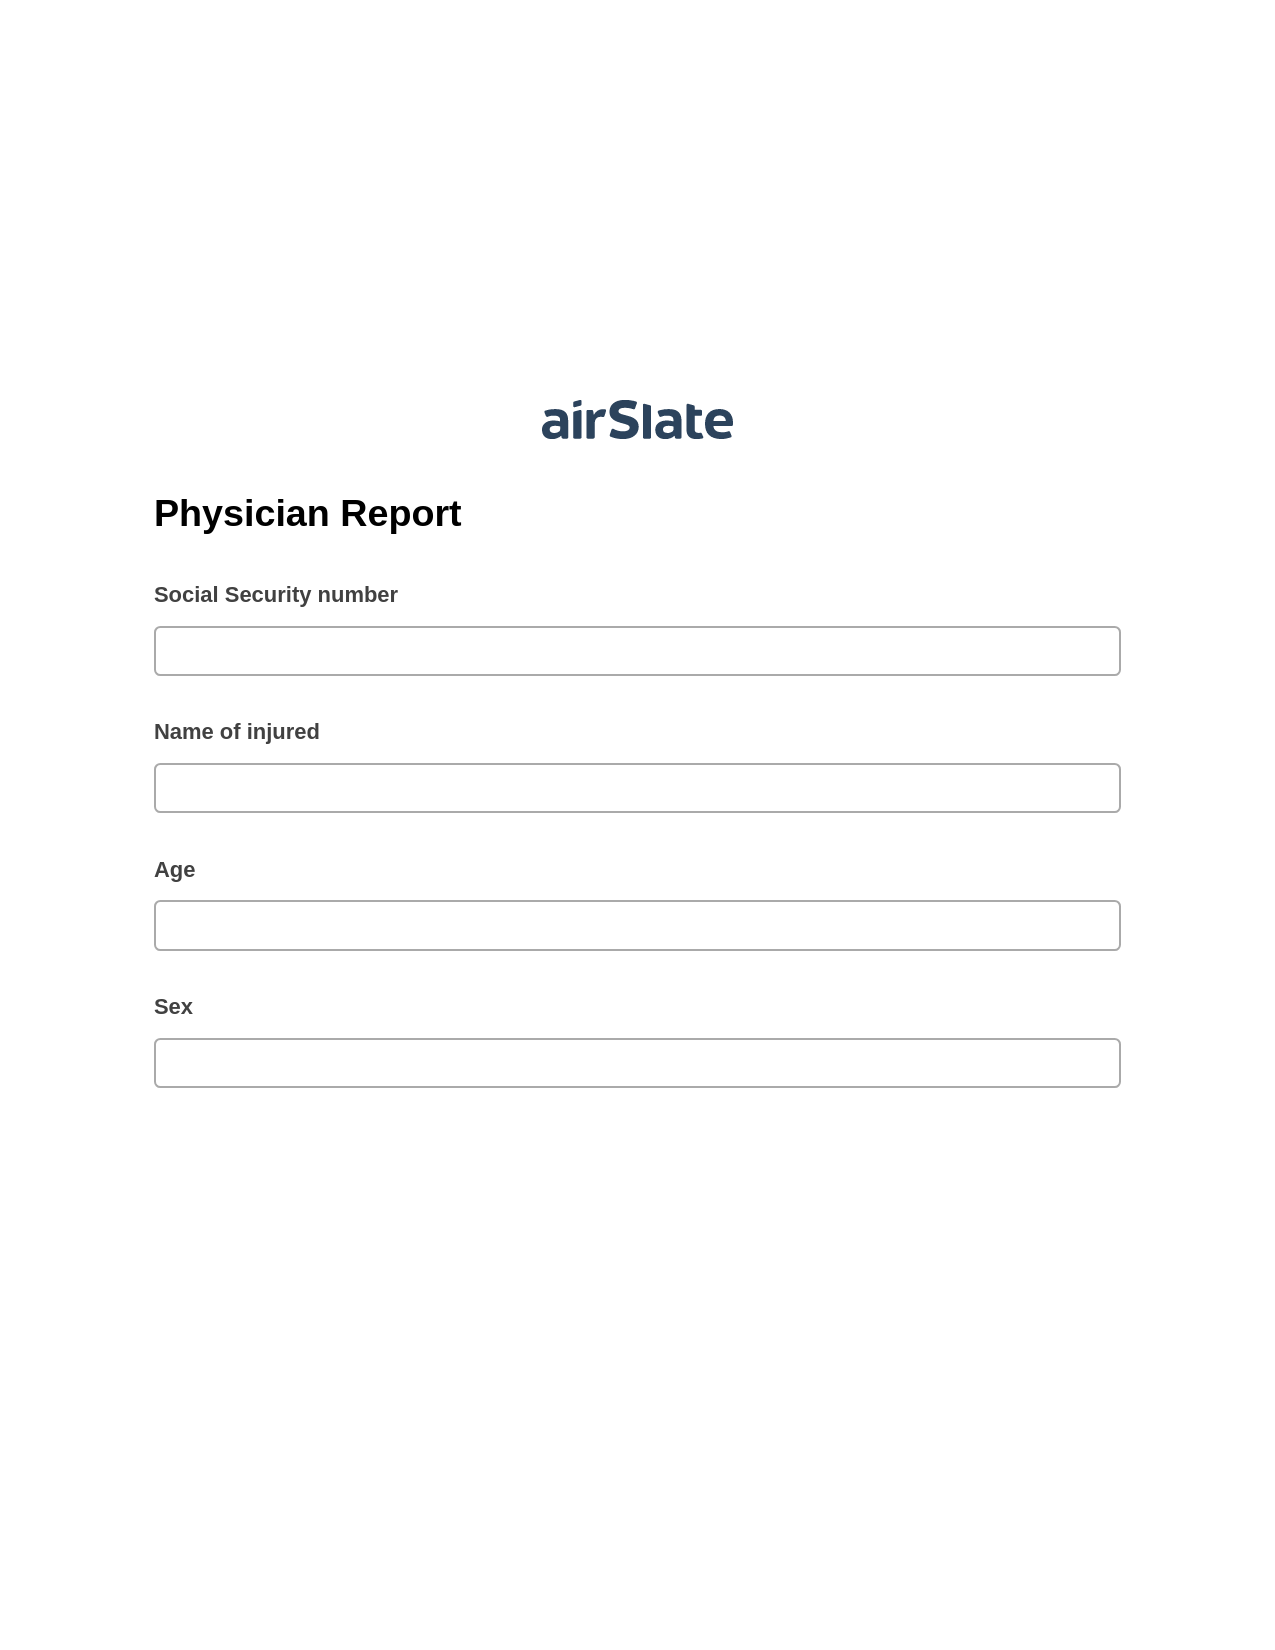 Physician Report Pre-fill Dropdowns from MySQL Bot, Invoke Salesforce Process Bot, Export to Google Sheet Bot